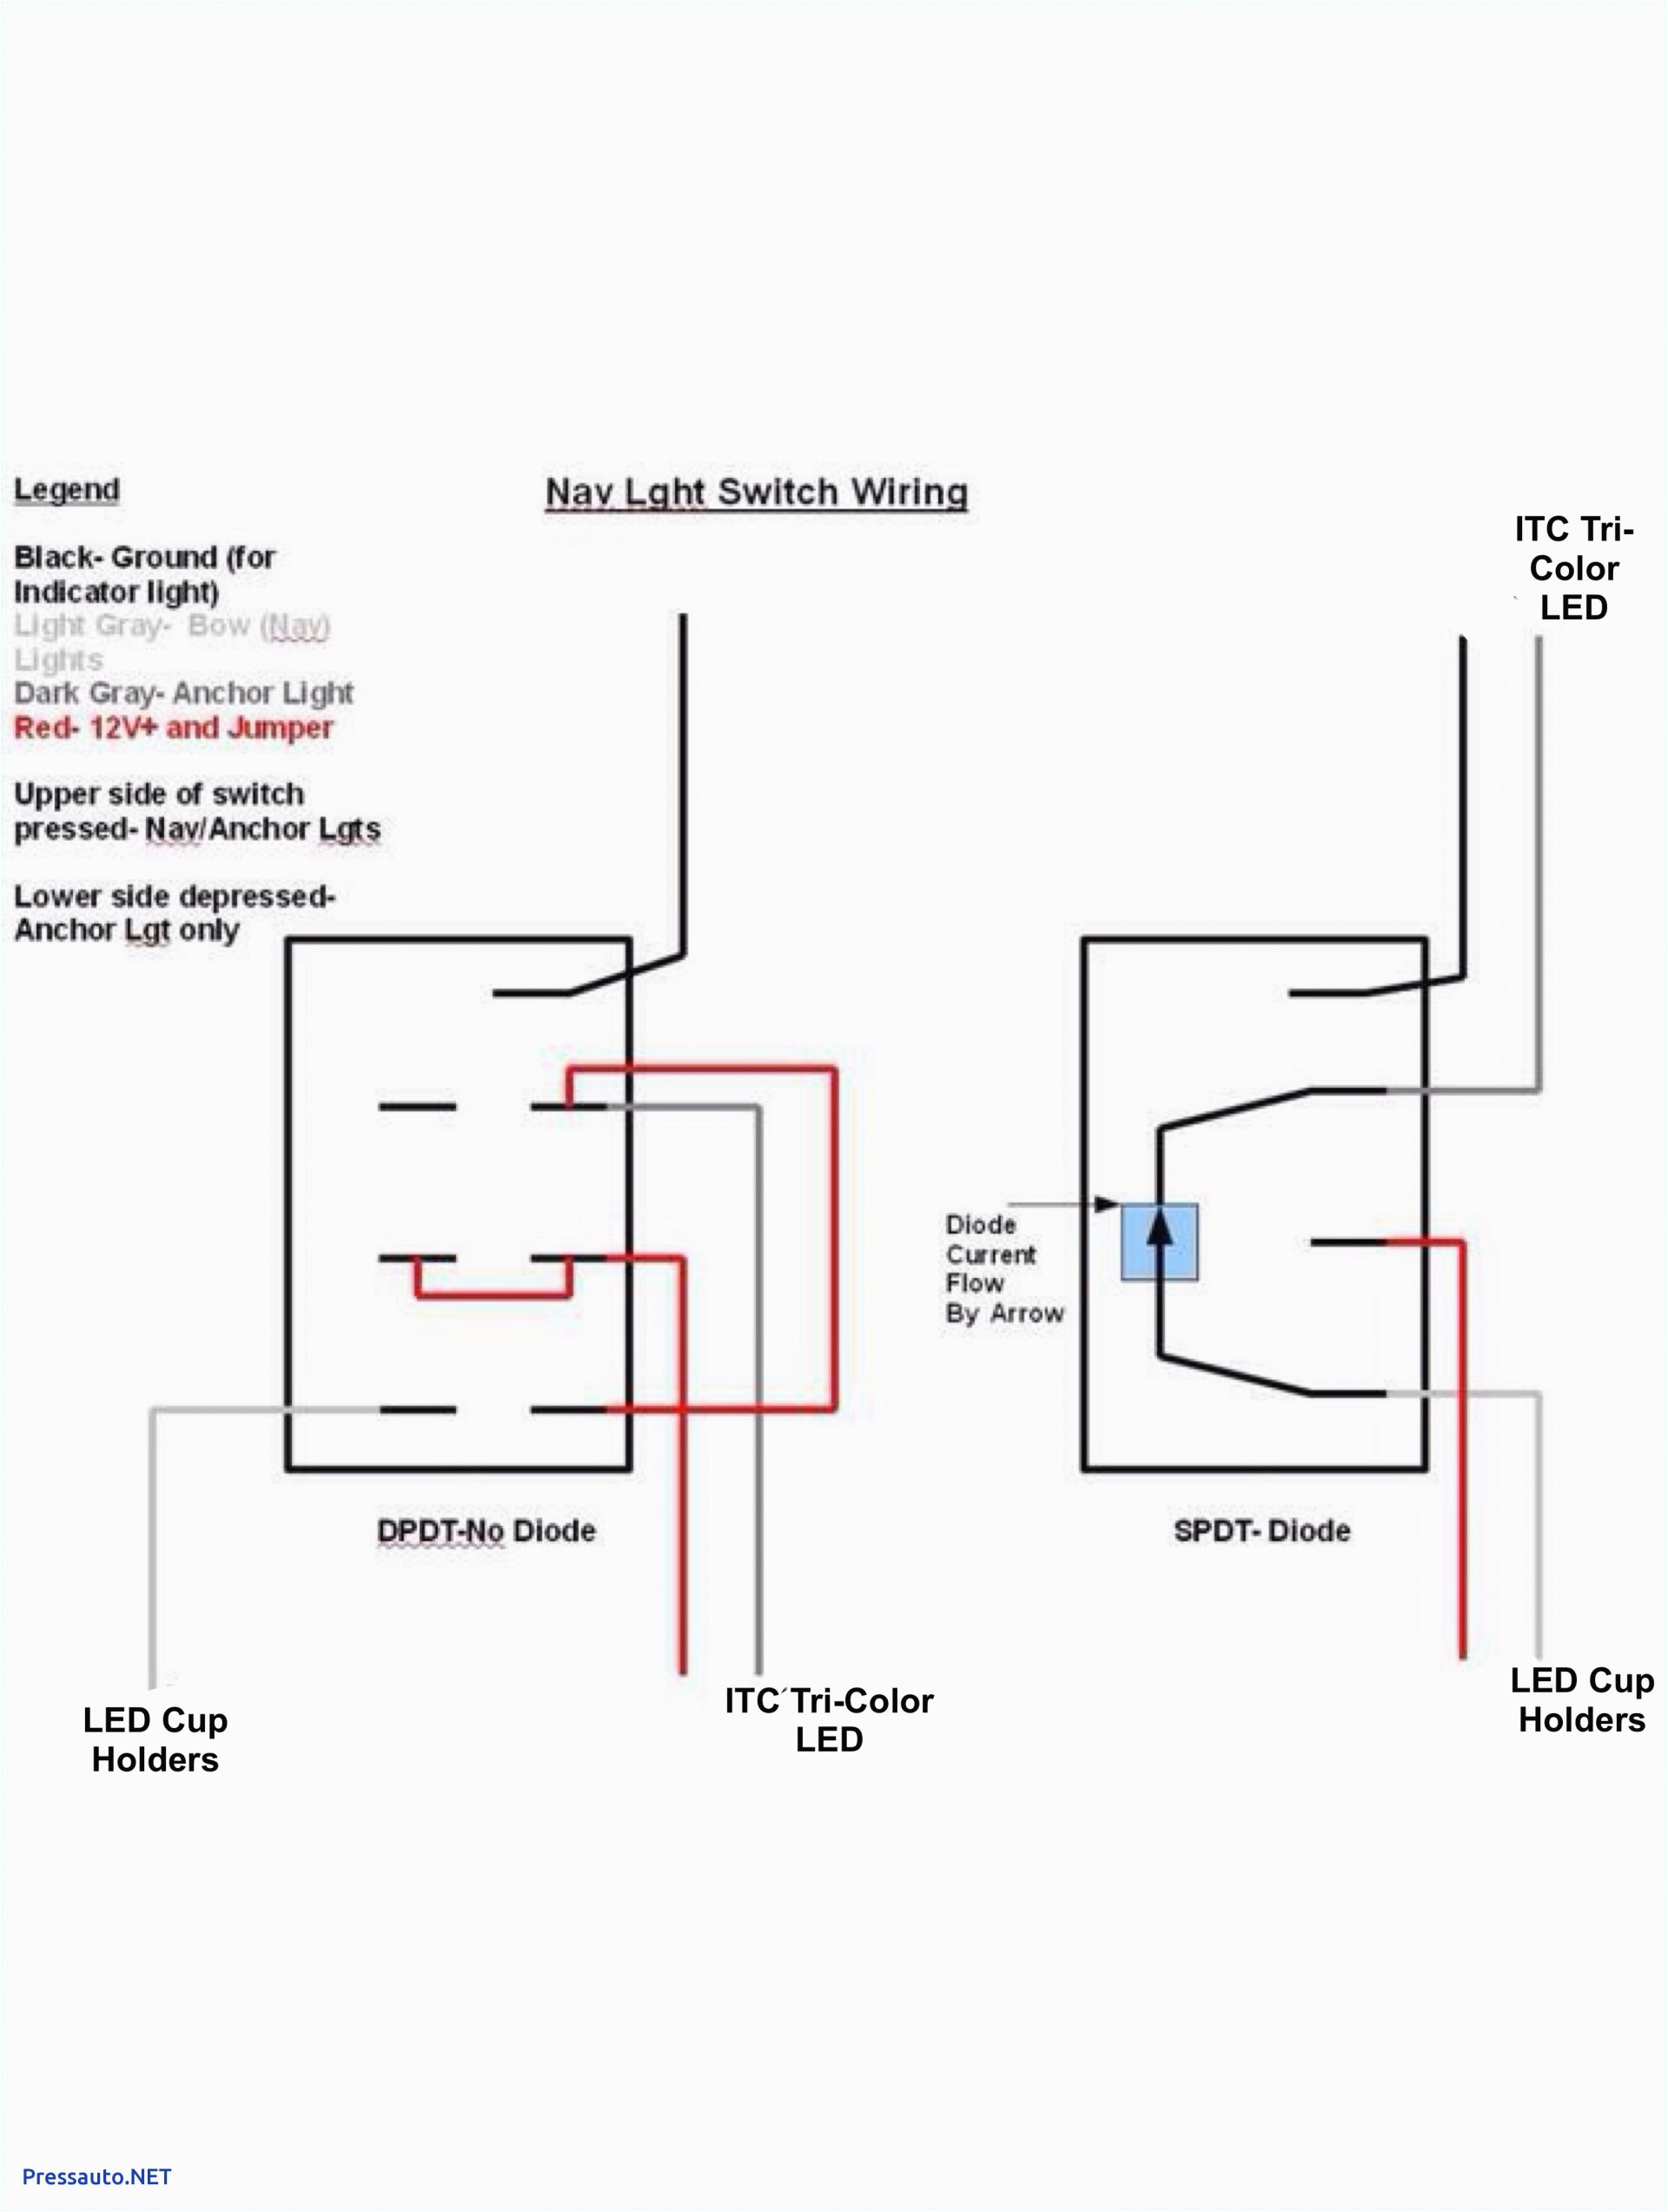 12 volt indicator light wiring diagram free download wiring 12 volt indicator light wiring diagram free download